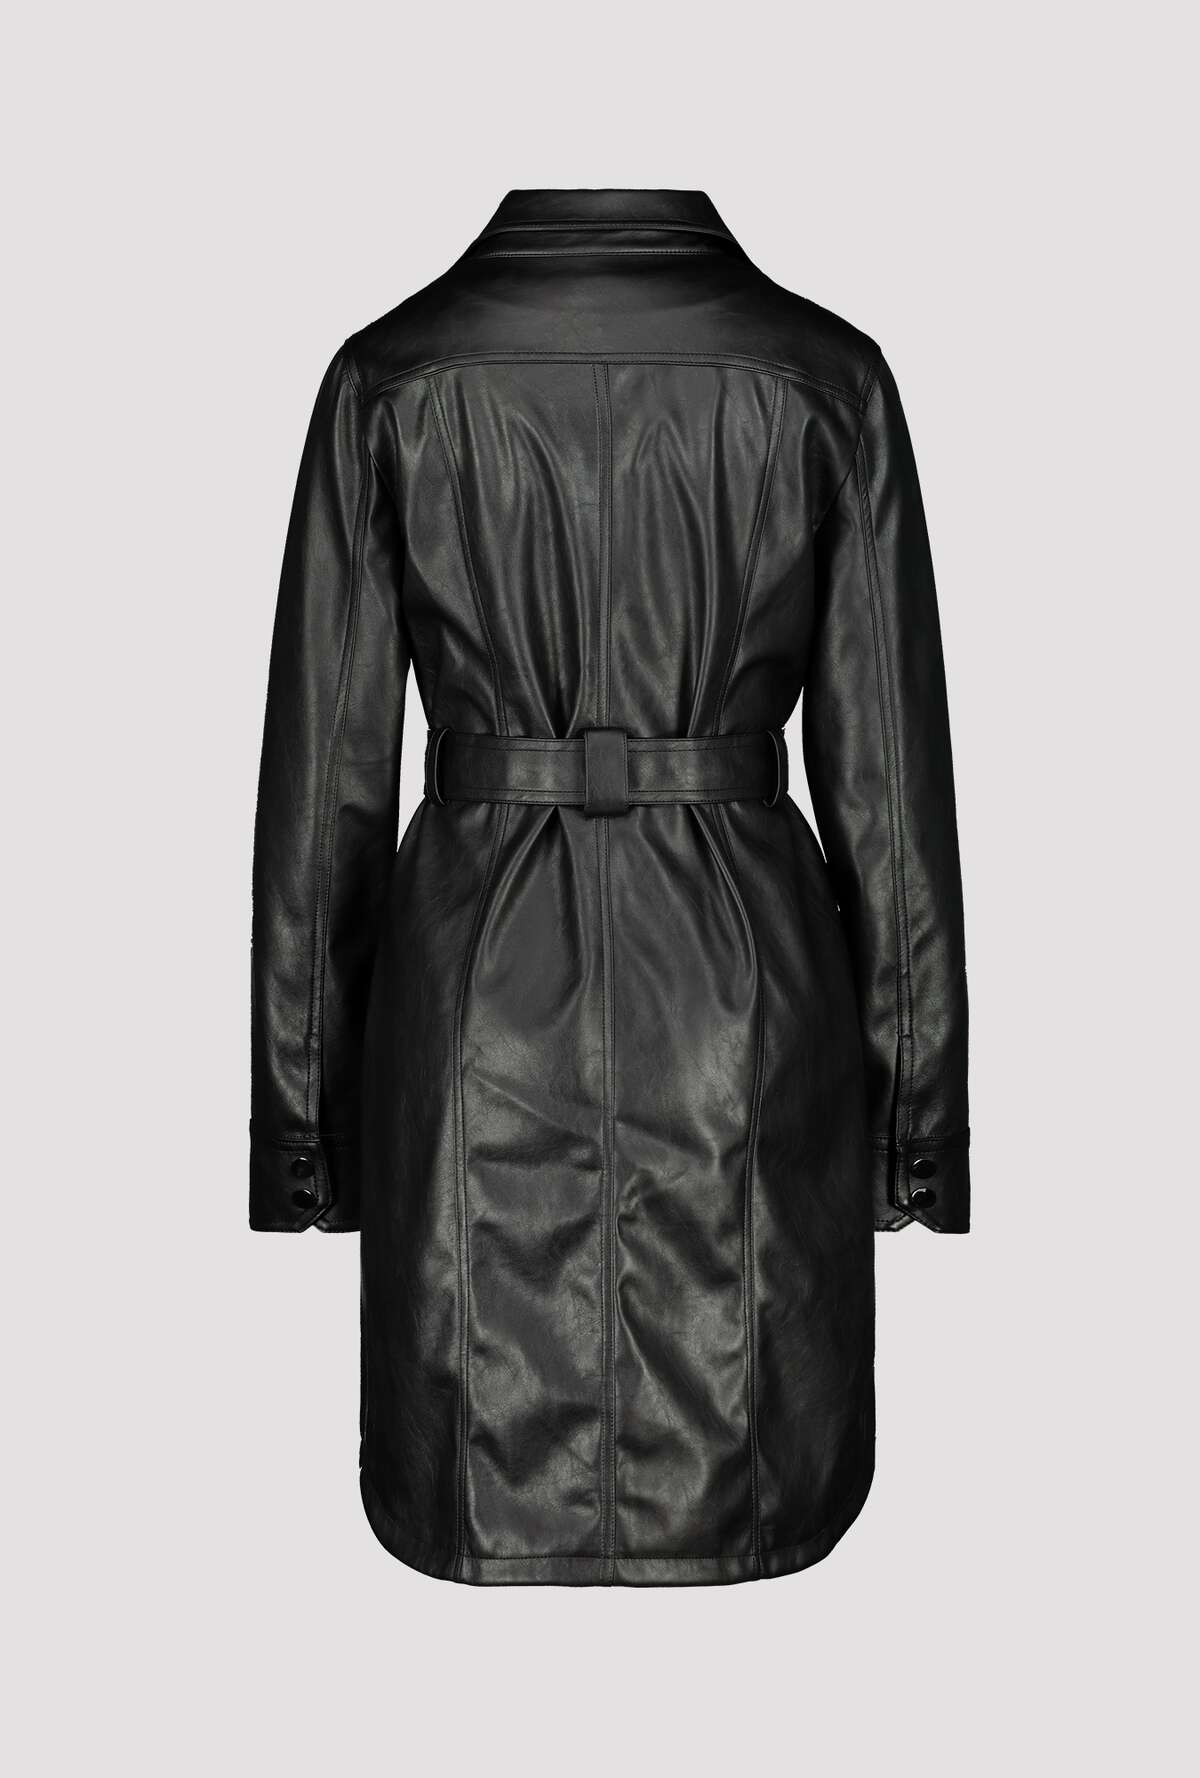 Monari Lederimitat Mantel aufgesetzten weber | mit Taschen mode Indoor